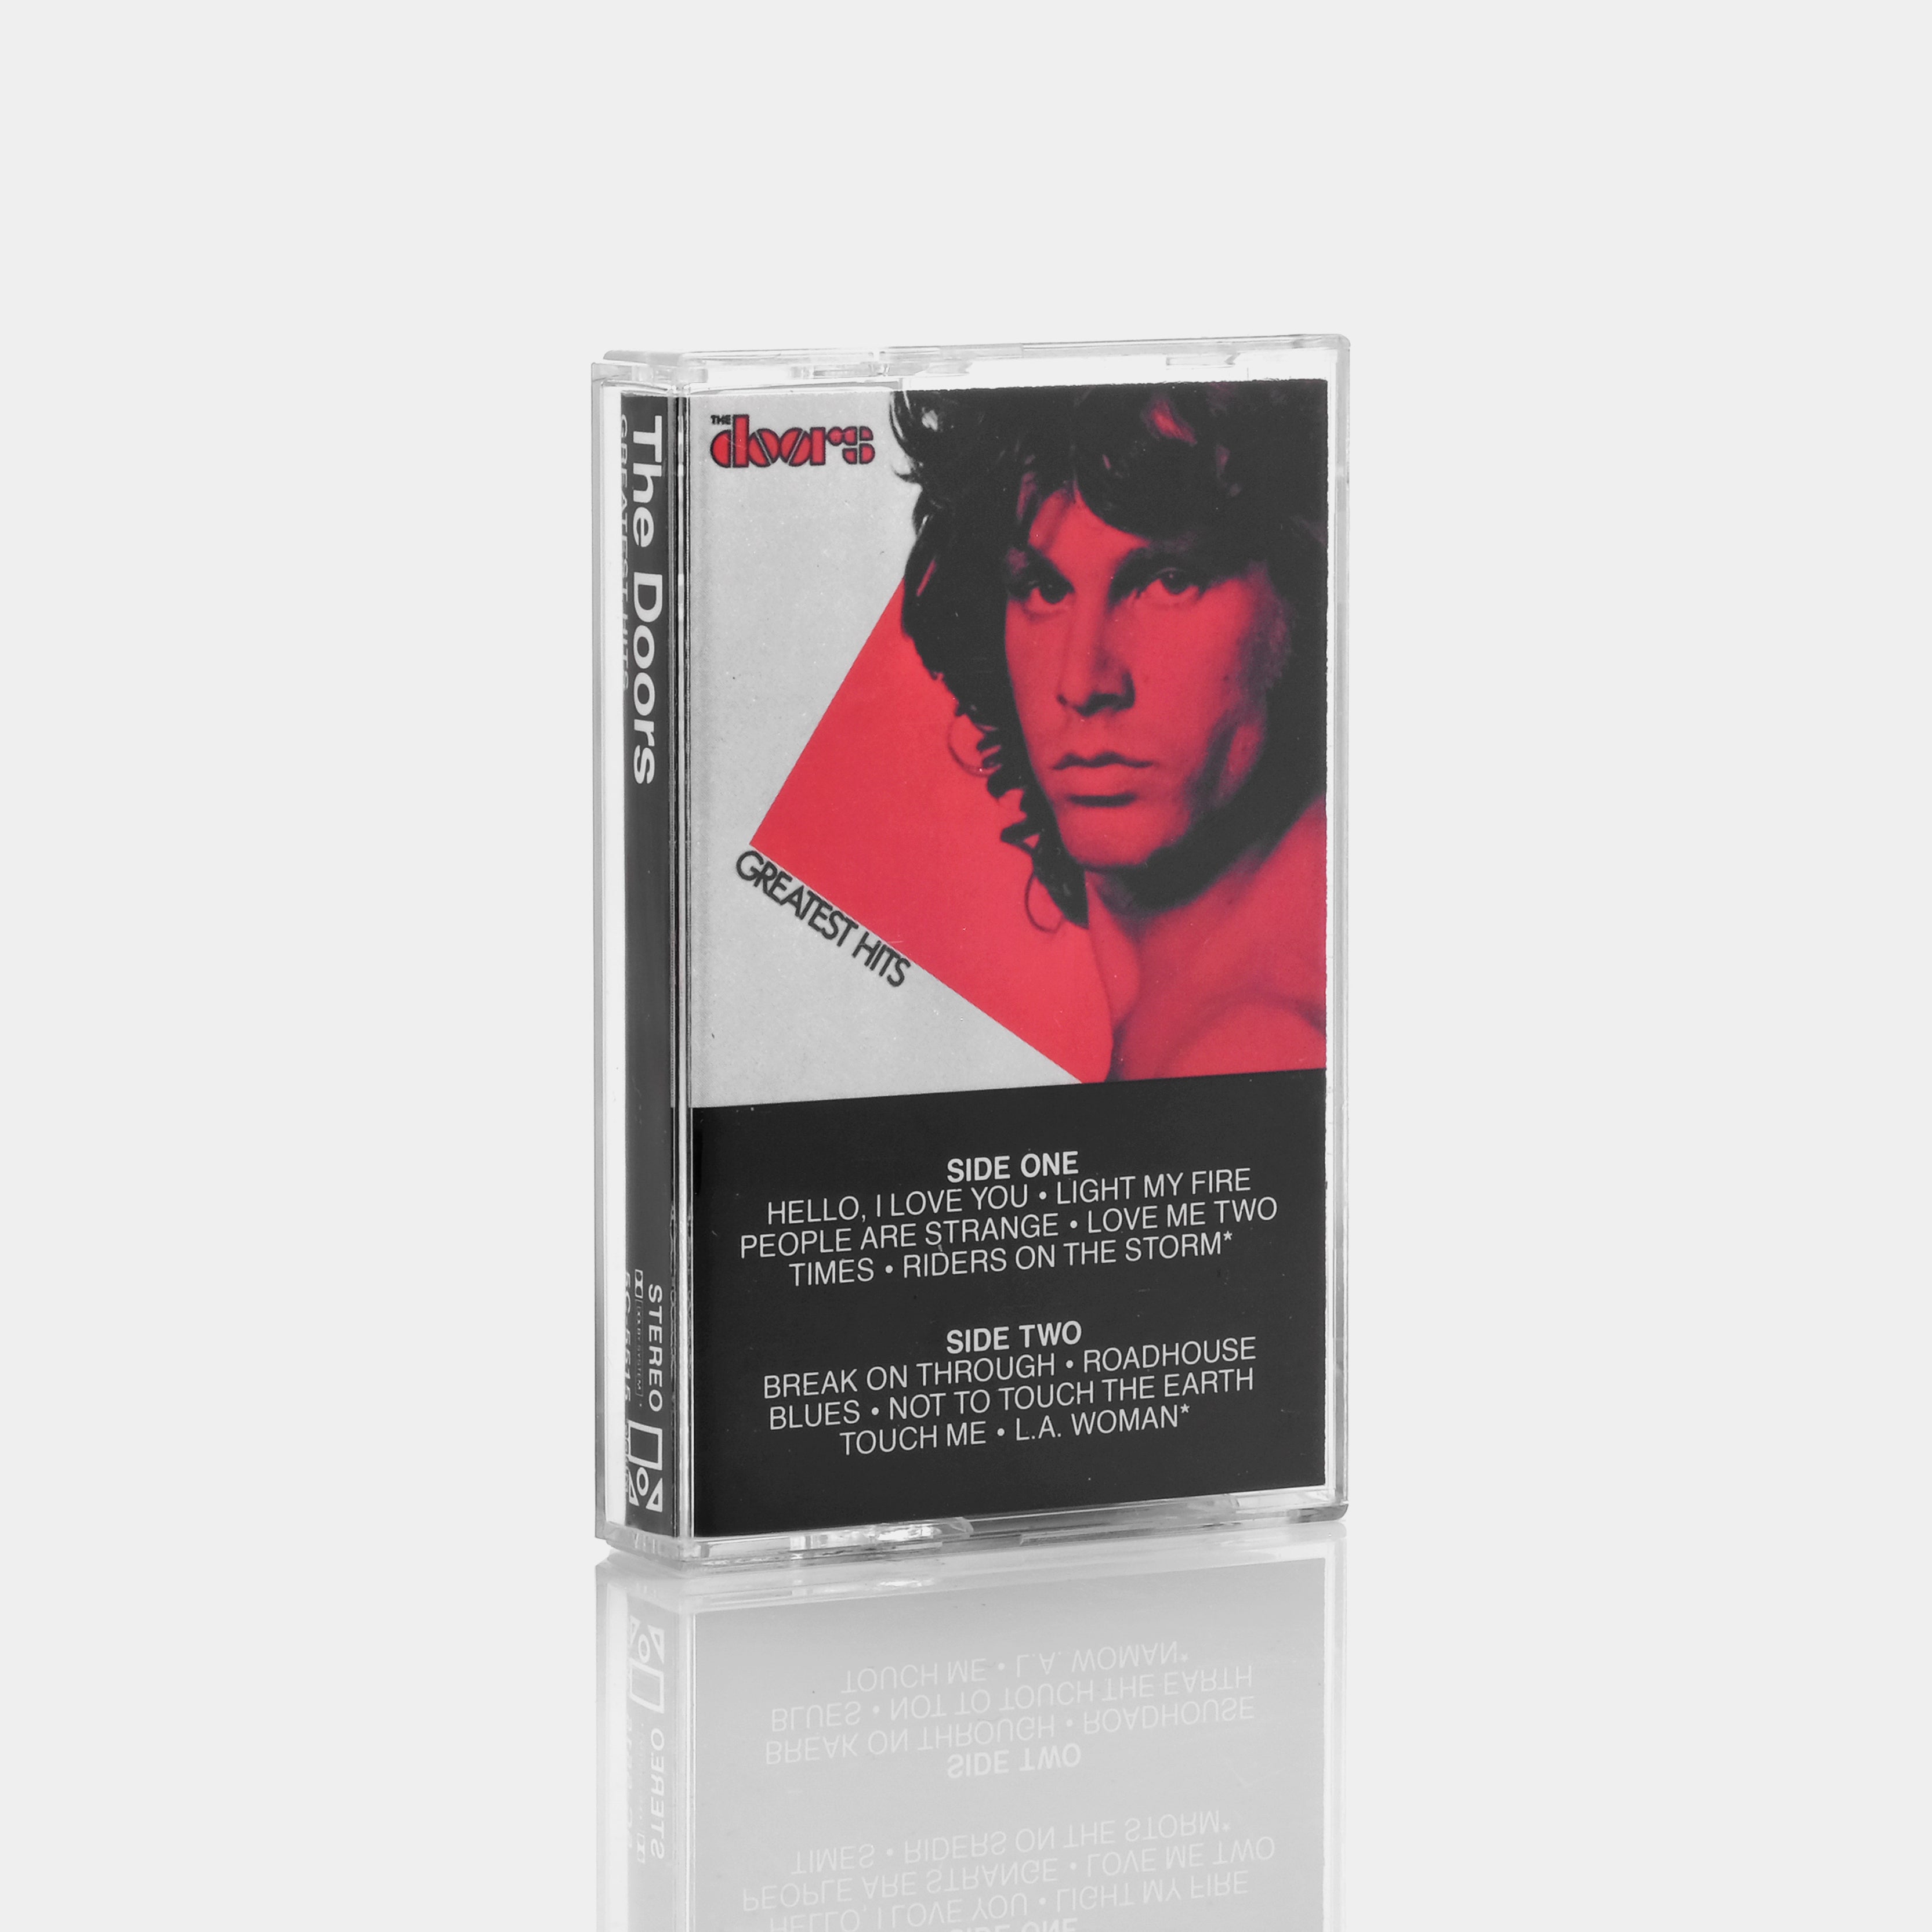 The Doors - Greatest Hits Cassette Tape